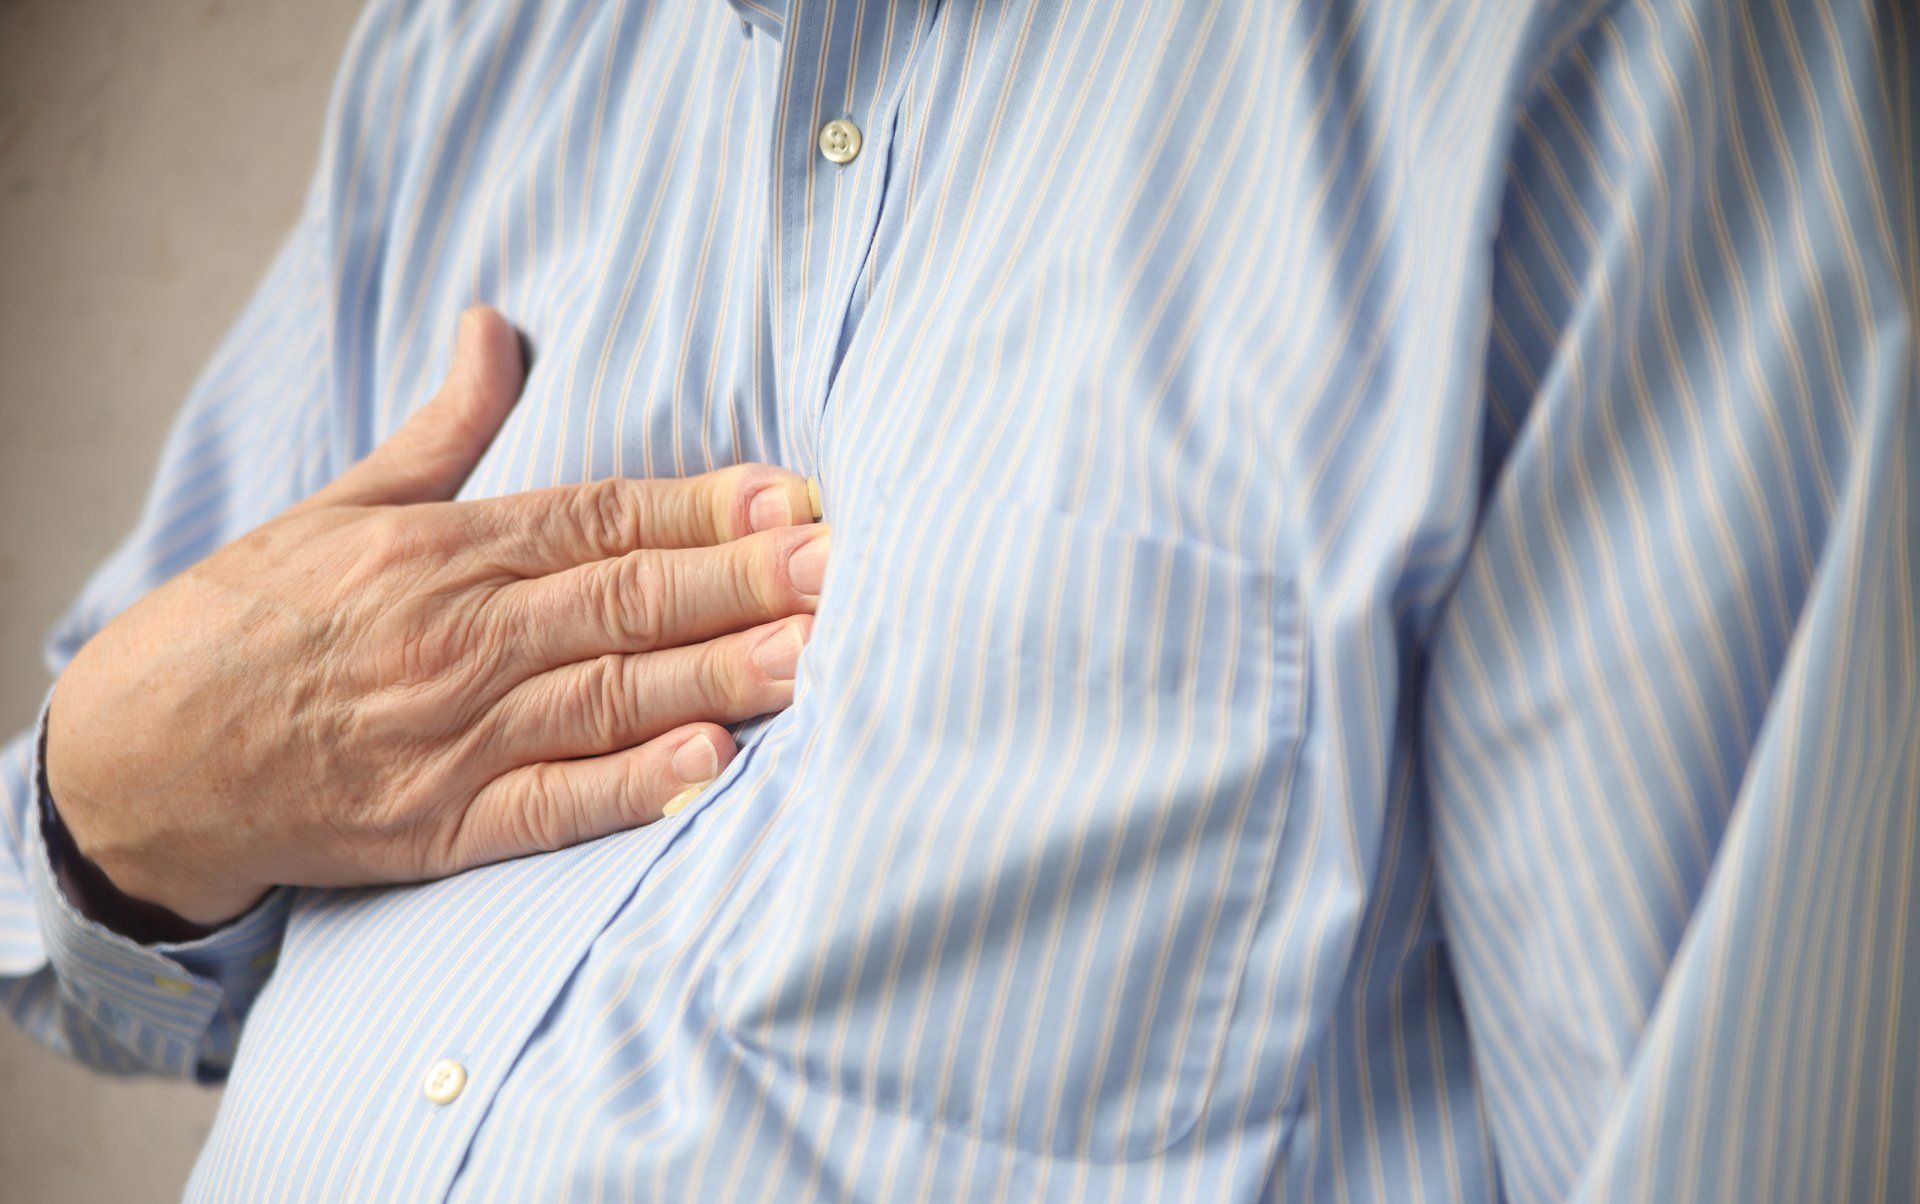 GERD Physicians Offer Tips to Relieve Chronic Heartburn